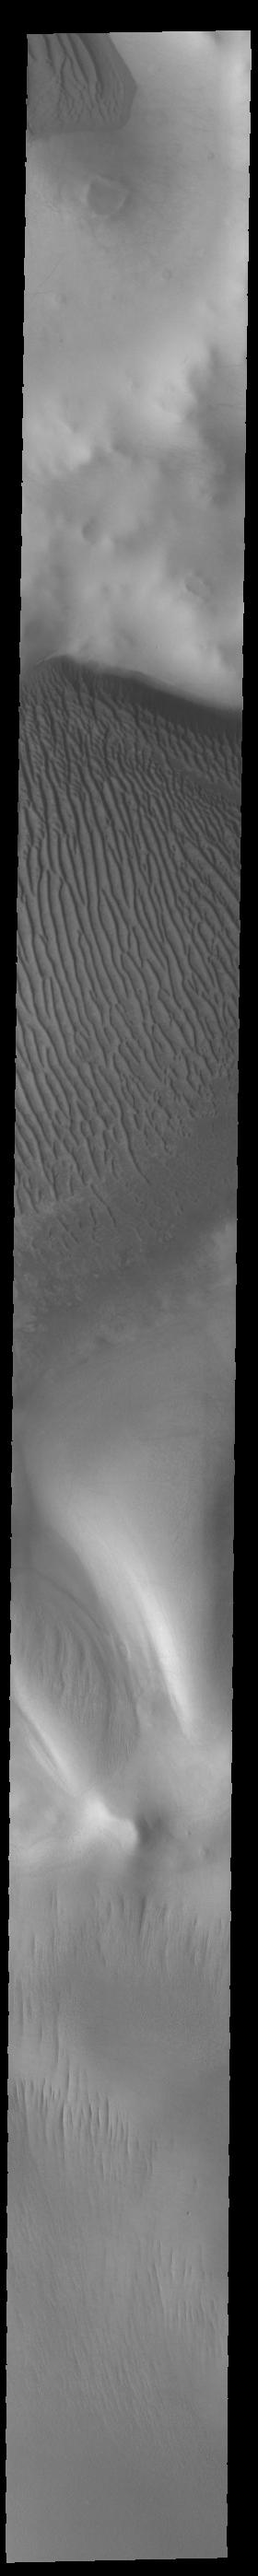 PIA24397: Richardson Crater Dunes